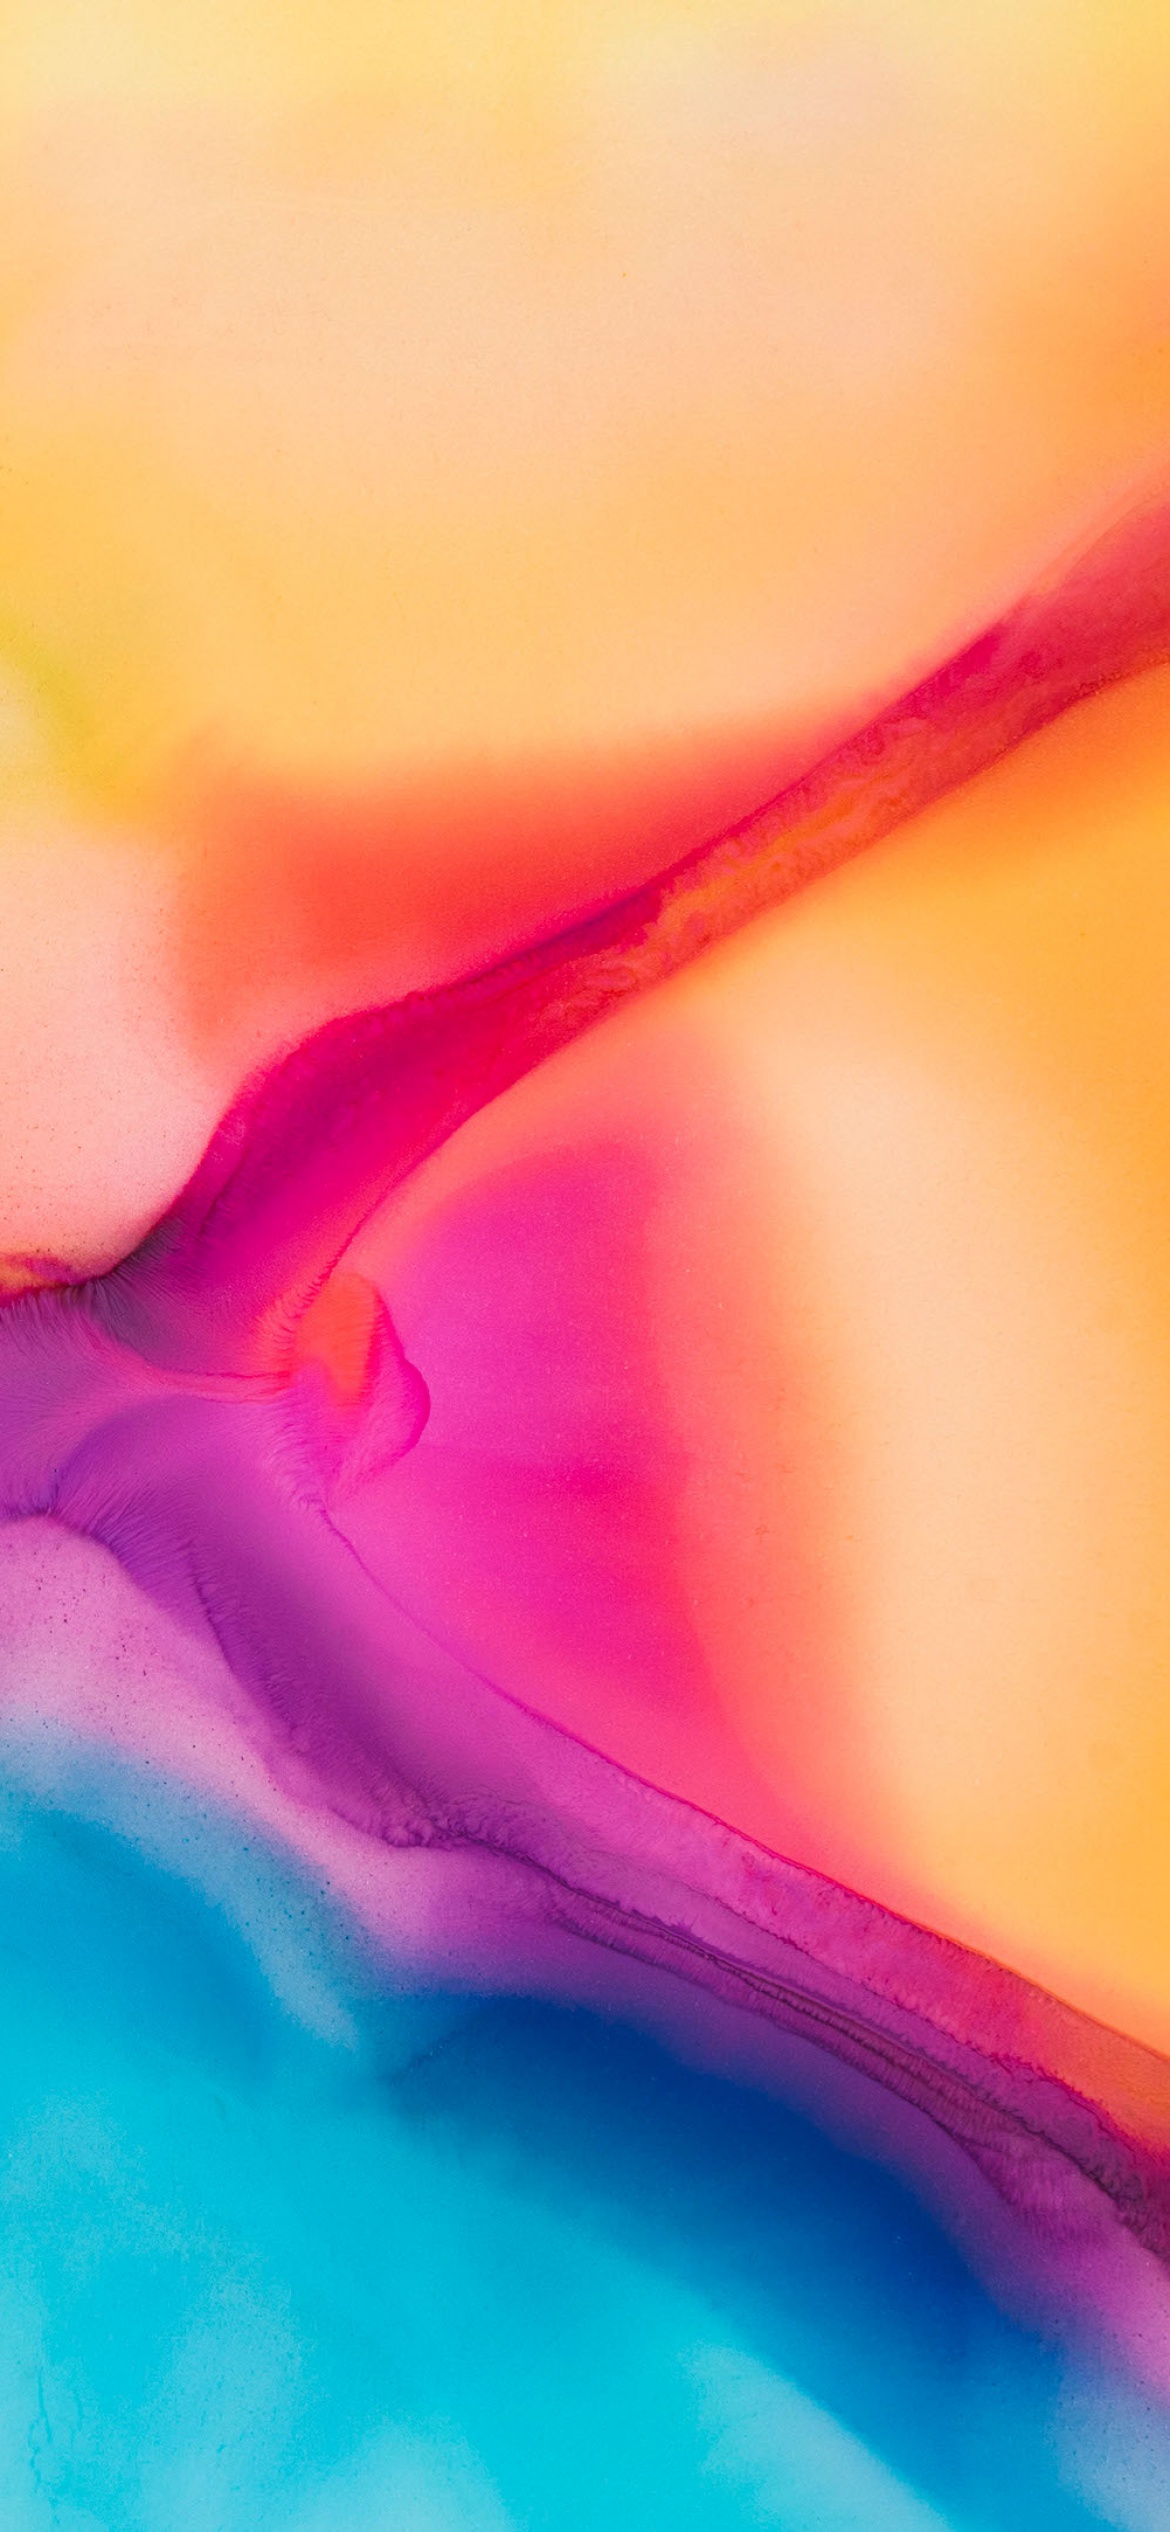 Liquid art Wallpaper 4K, Colorful, Fluid, Waves, Abstract, #1324